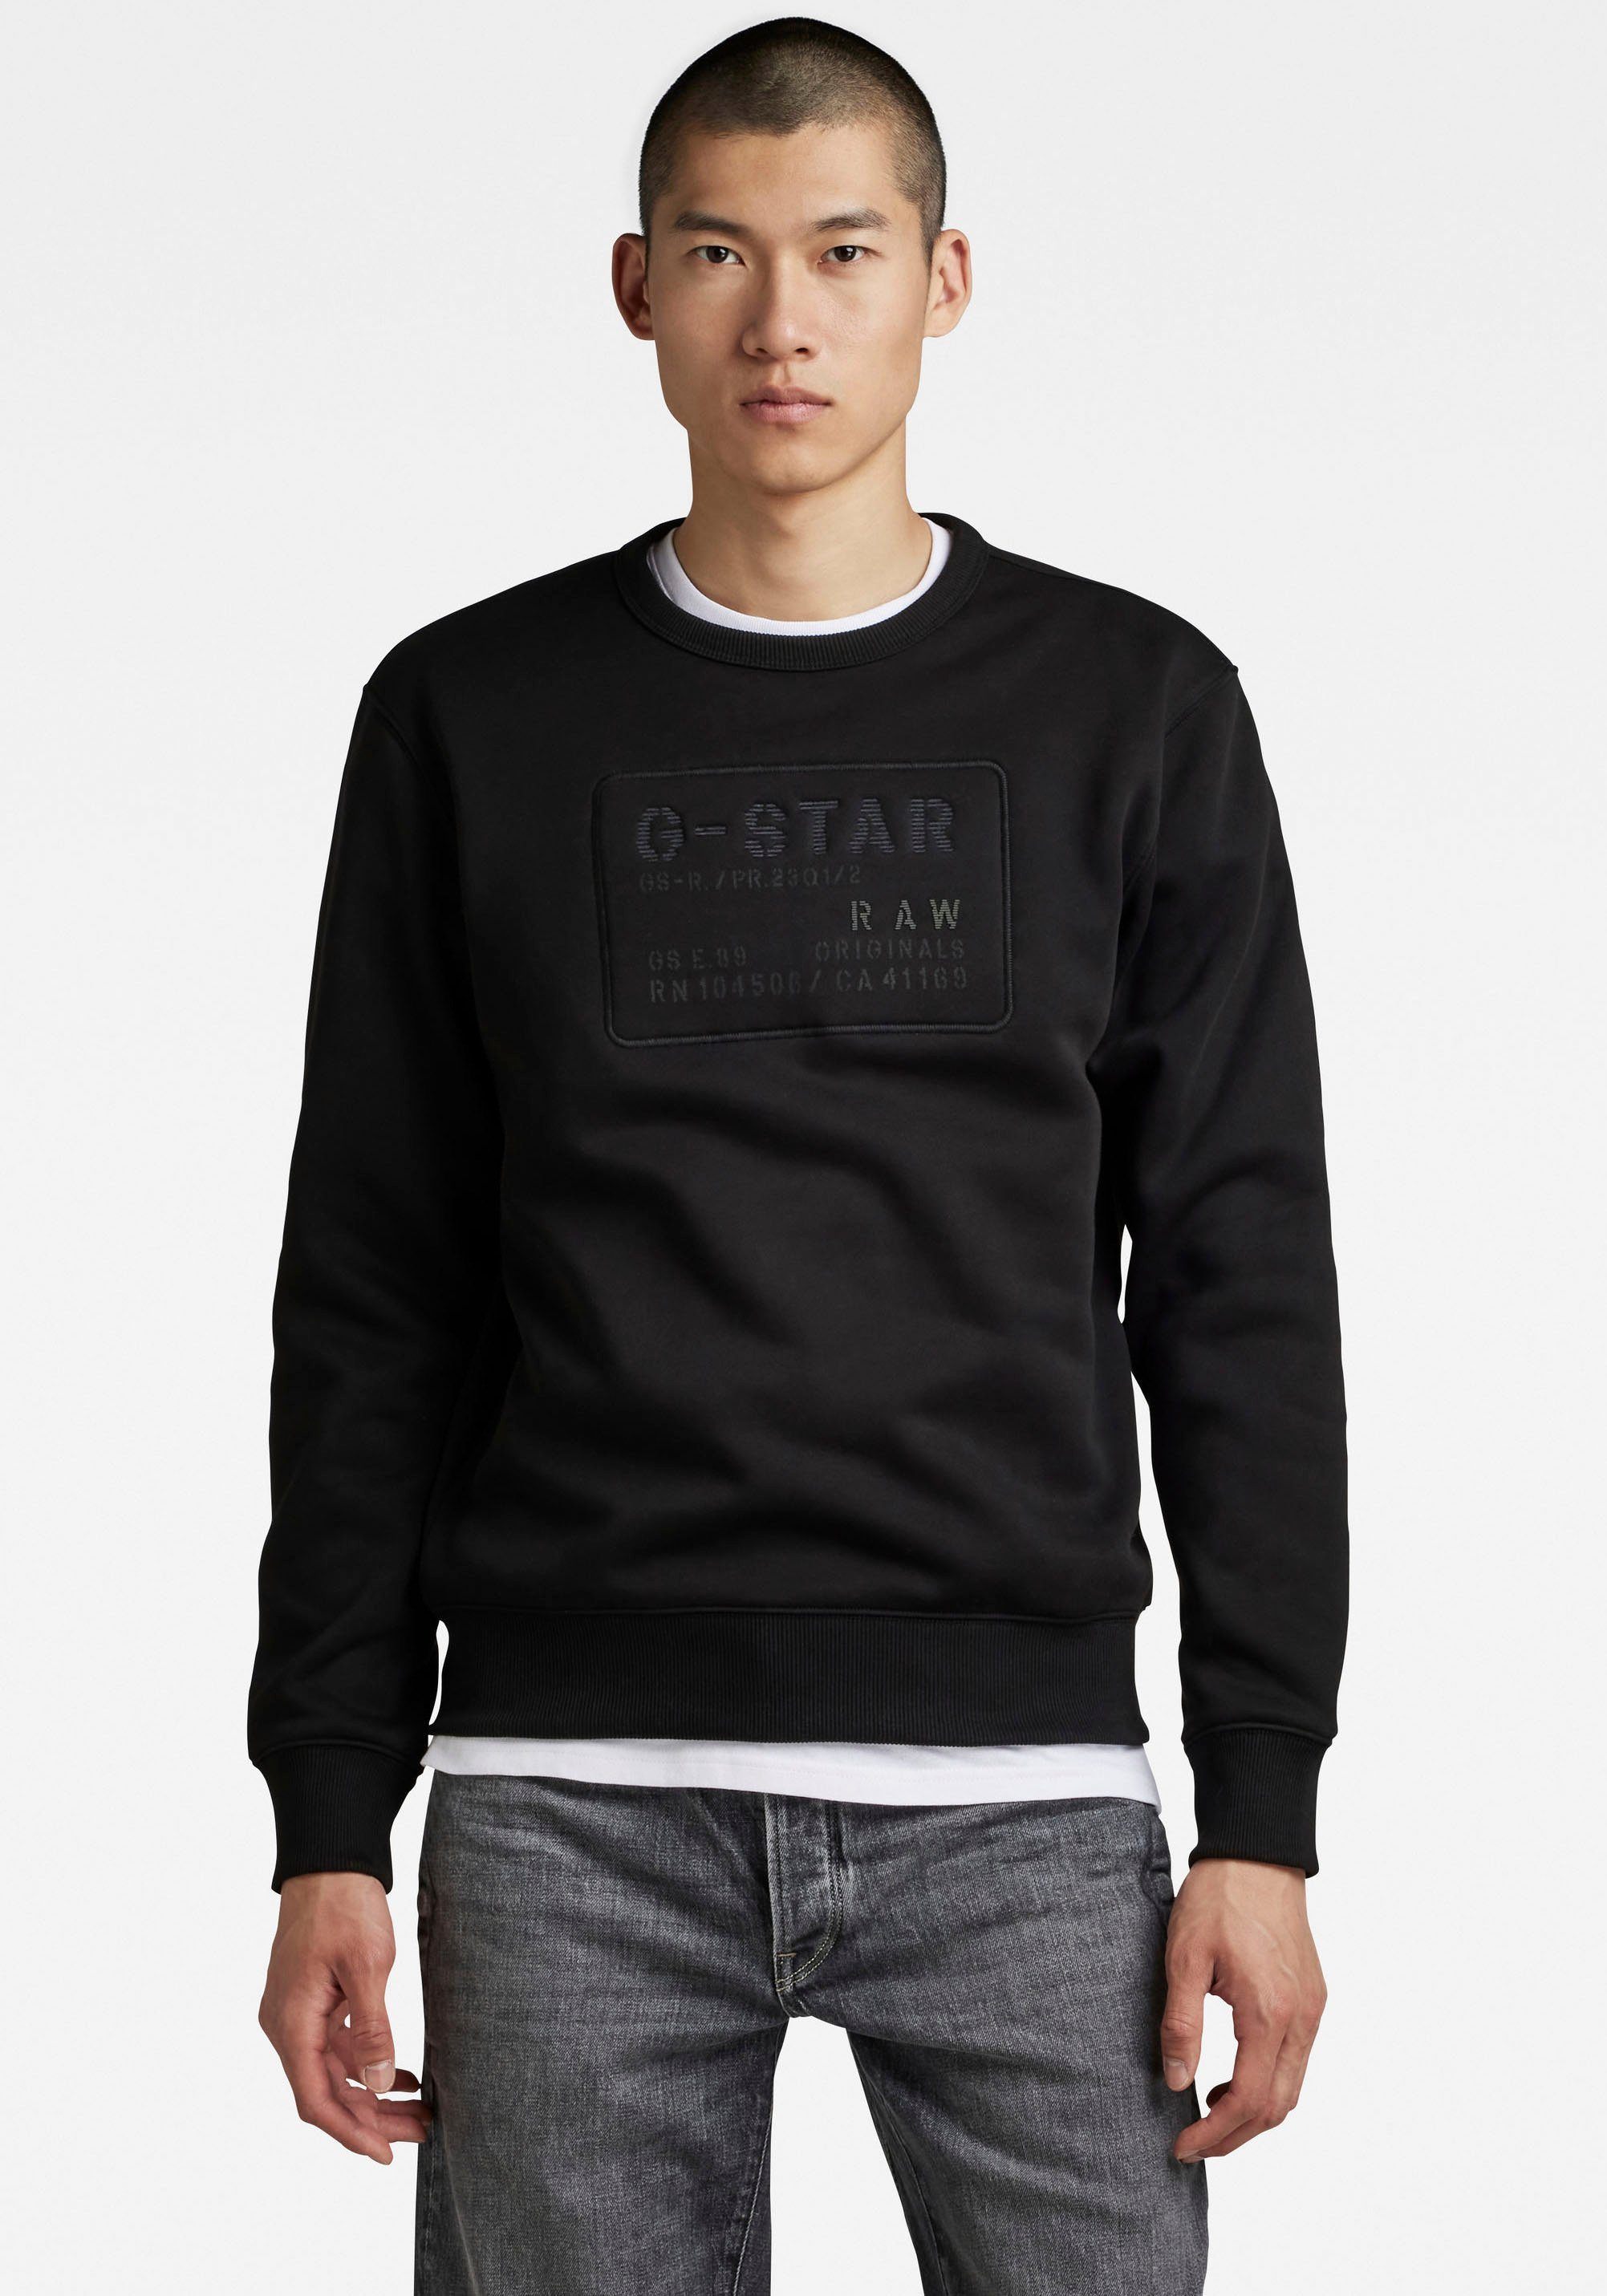 RAW G-Star Dark Sweatshirt Sweatshirt Originals black